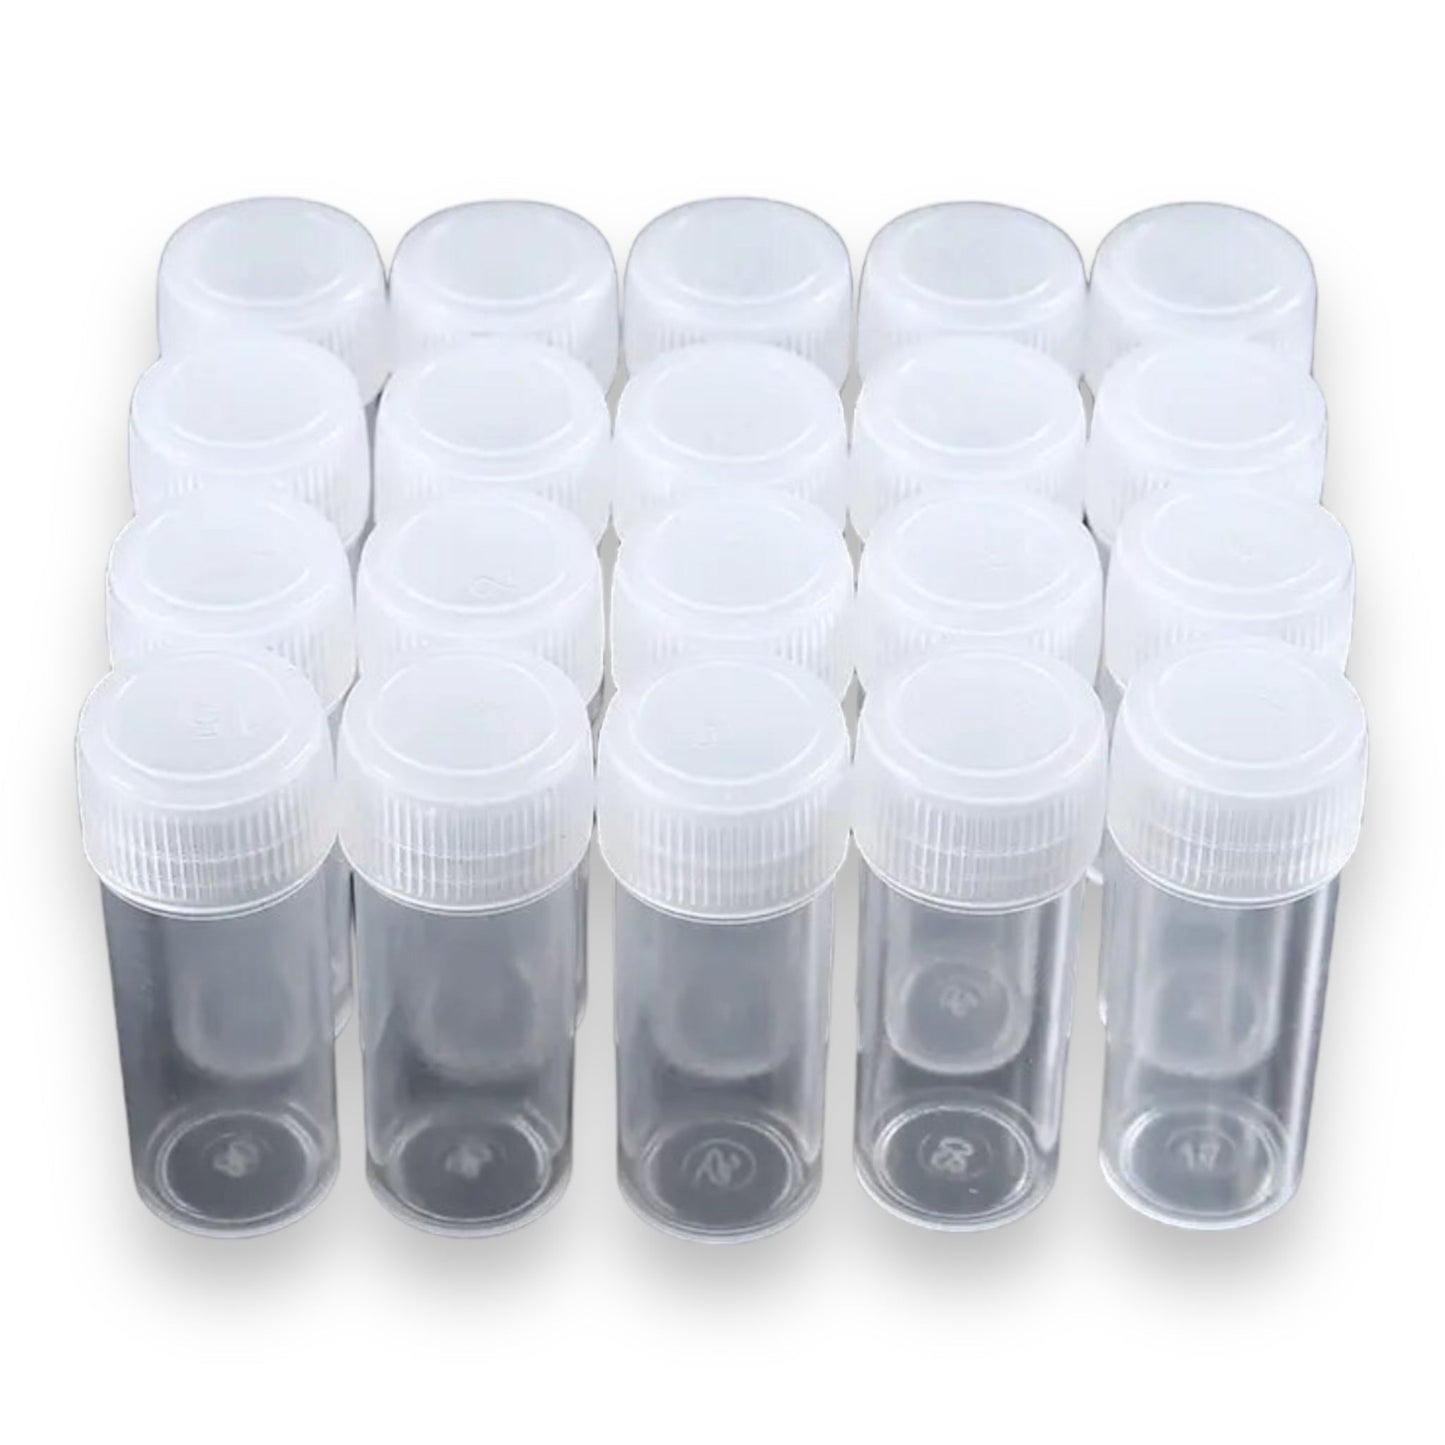 Plastic Test Tubes - 0.5 ml (20 Stuks) - Transparant